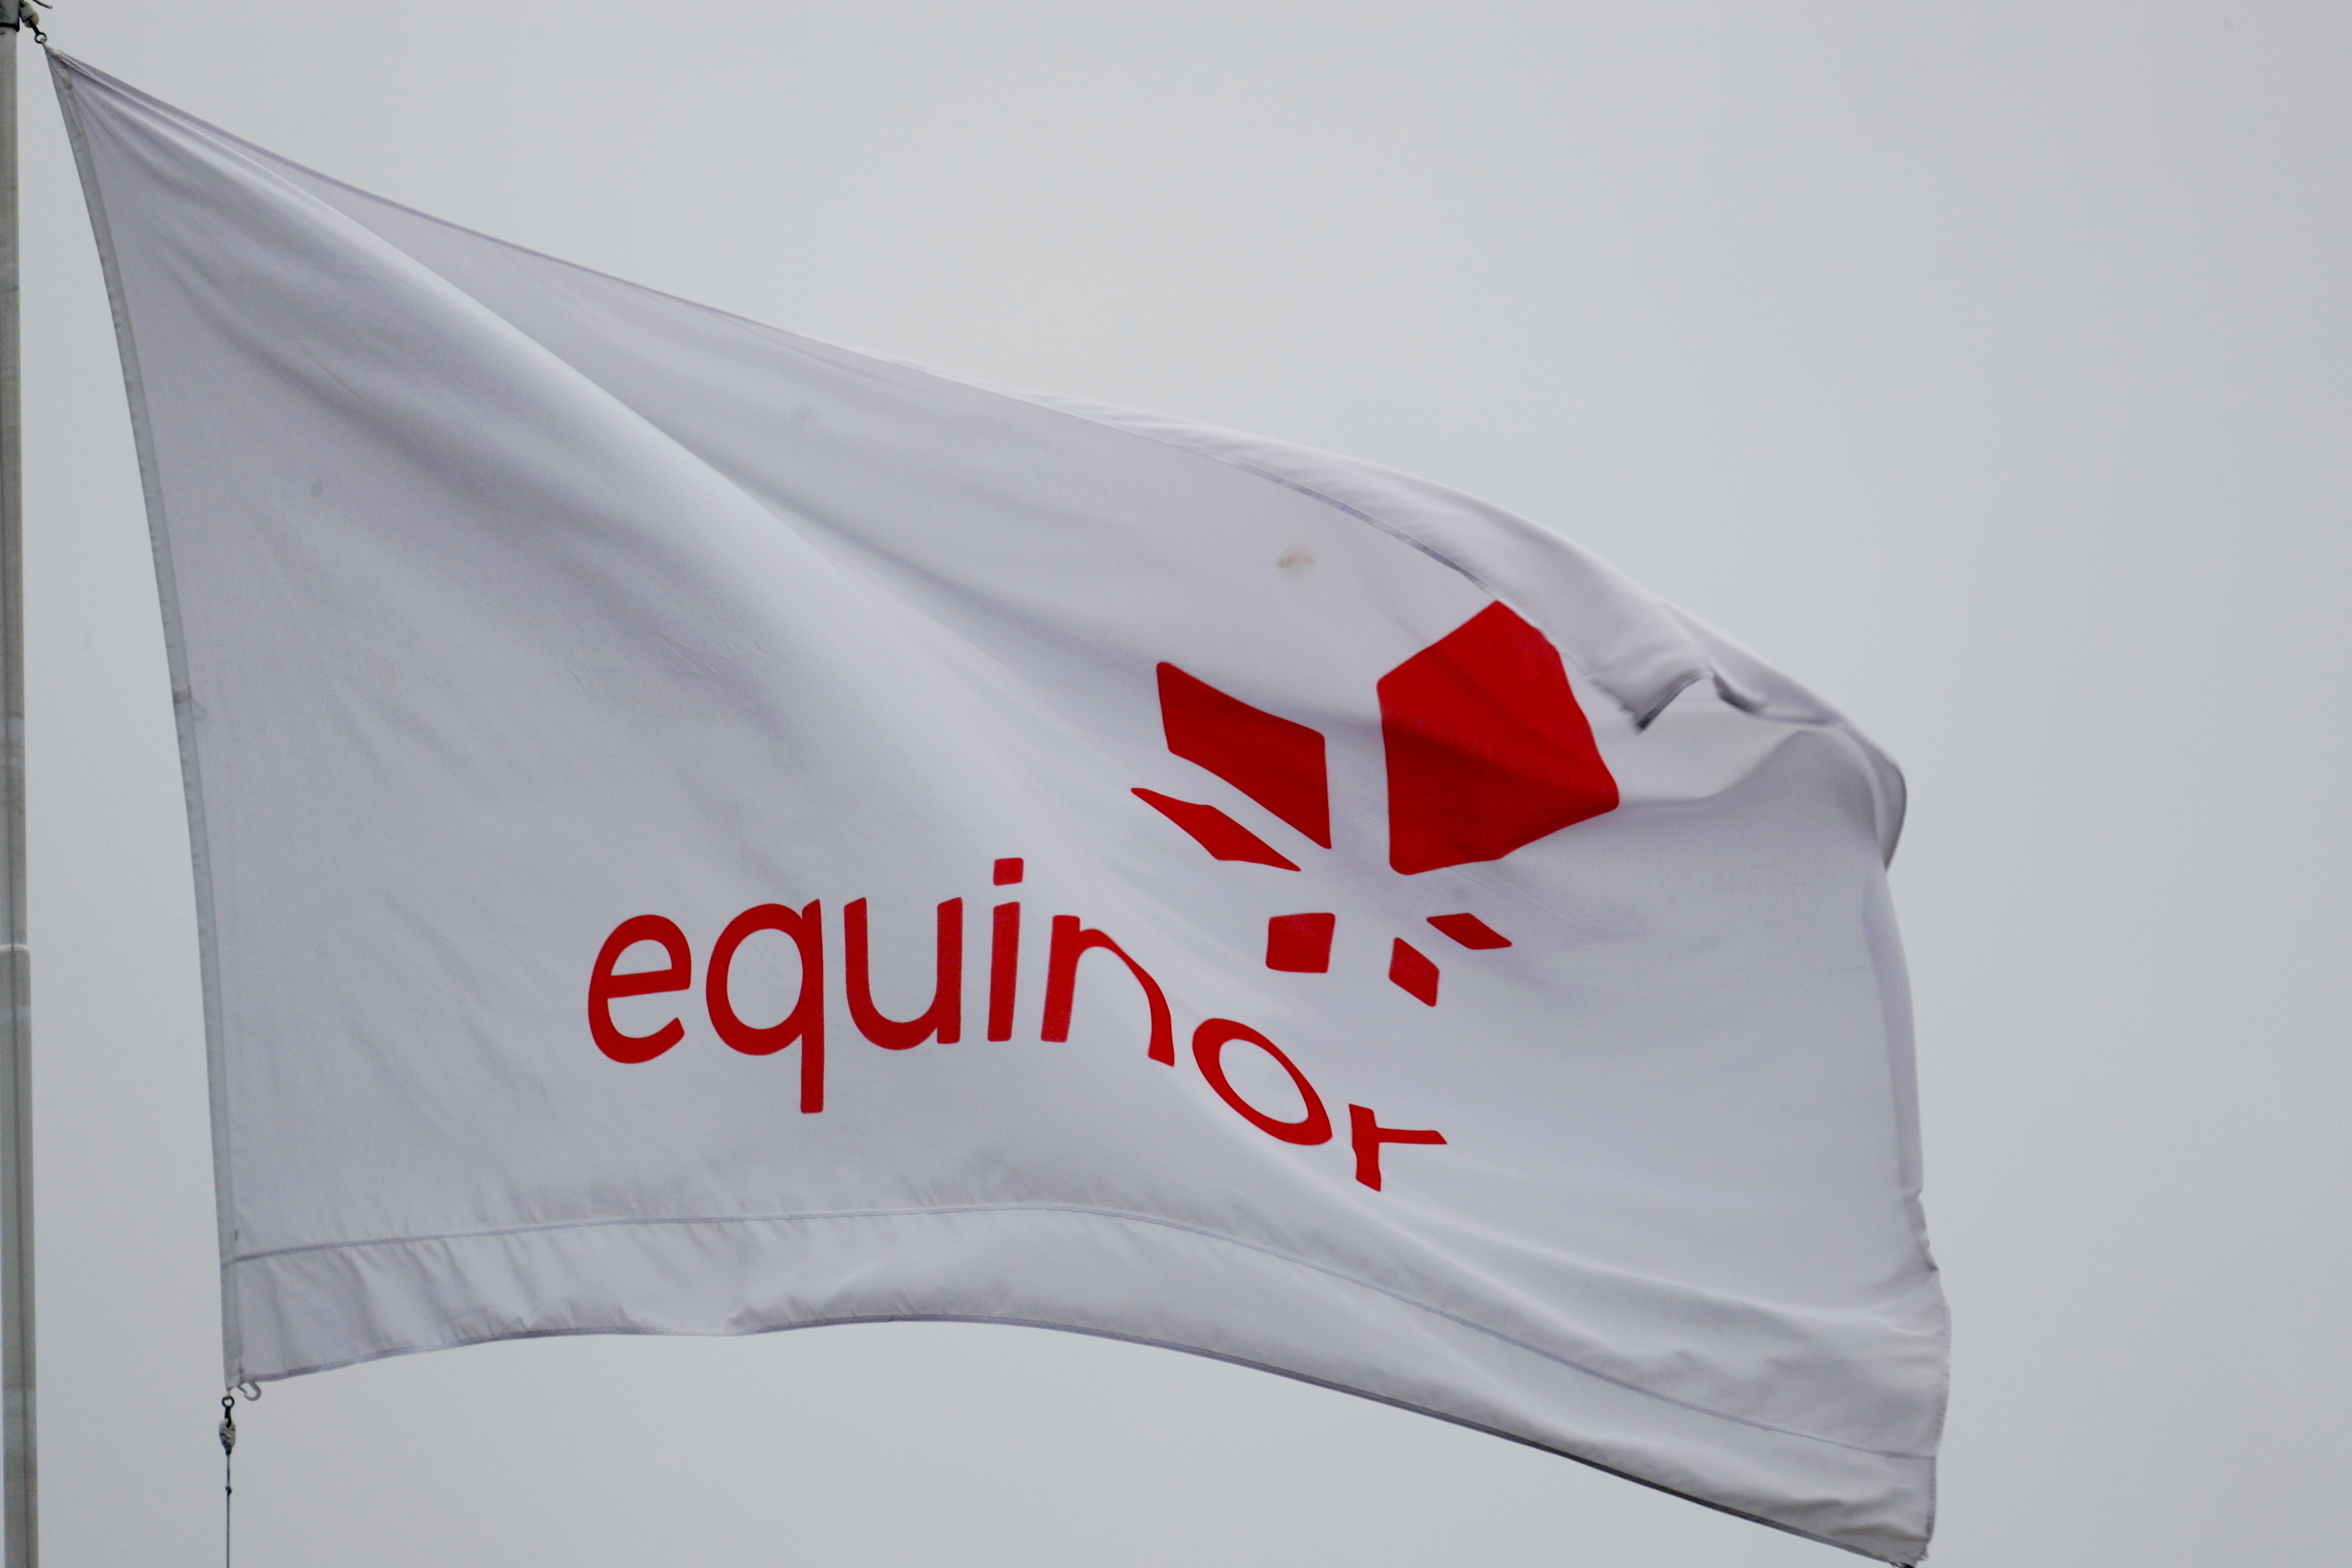 Equinor's flag in Stavanger, Norway December 5, 2019. REUTERS/Ints Kalnins